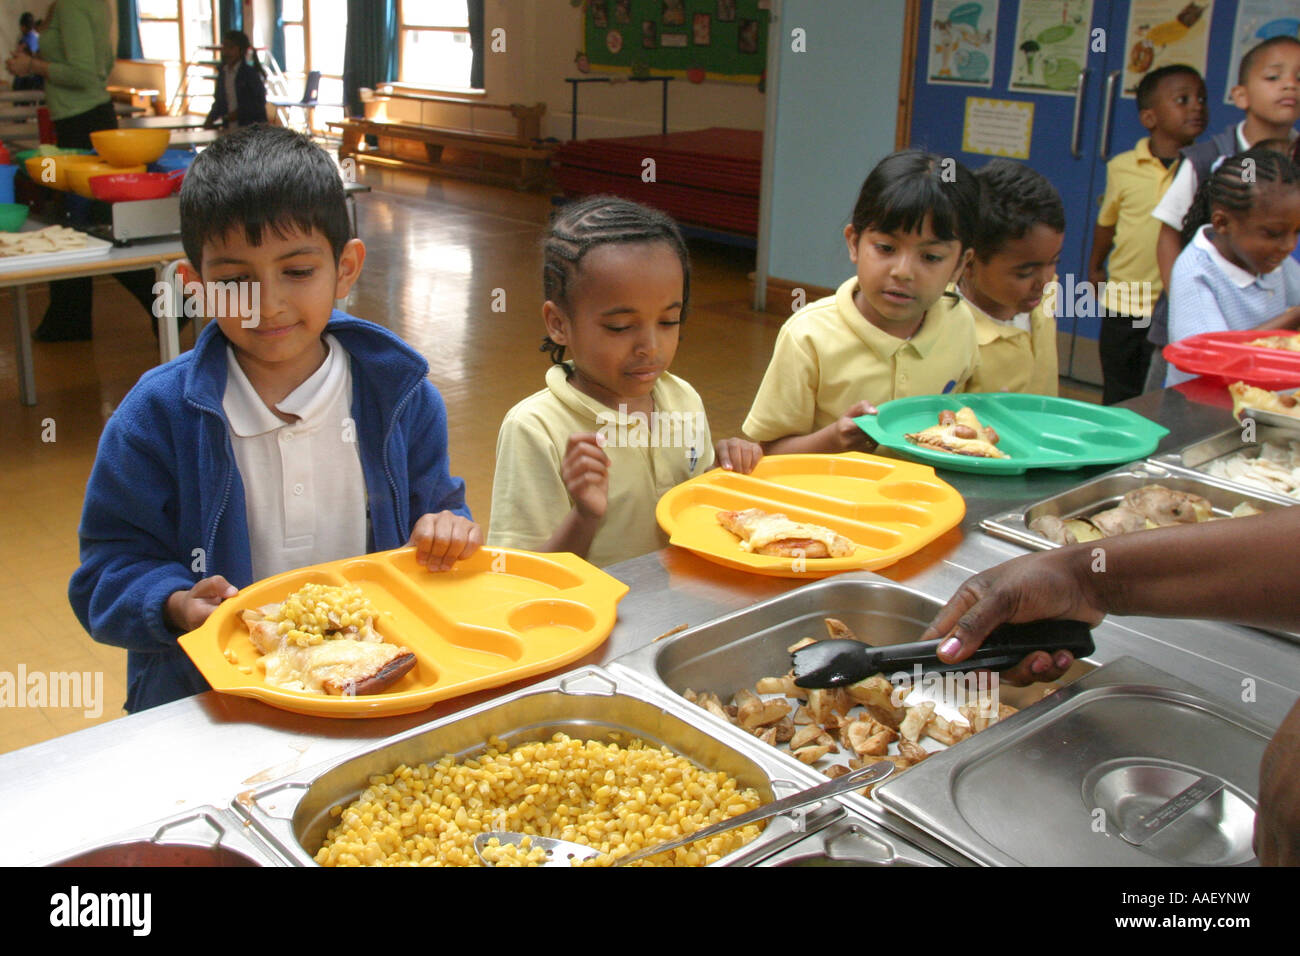 https://c8.alamy.com/comp/AAEYNW/primary-school-canteen-with-children-queueing-for-lunch-AAEYNW.jpg